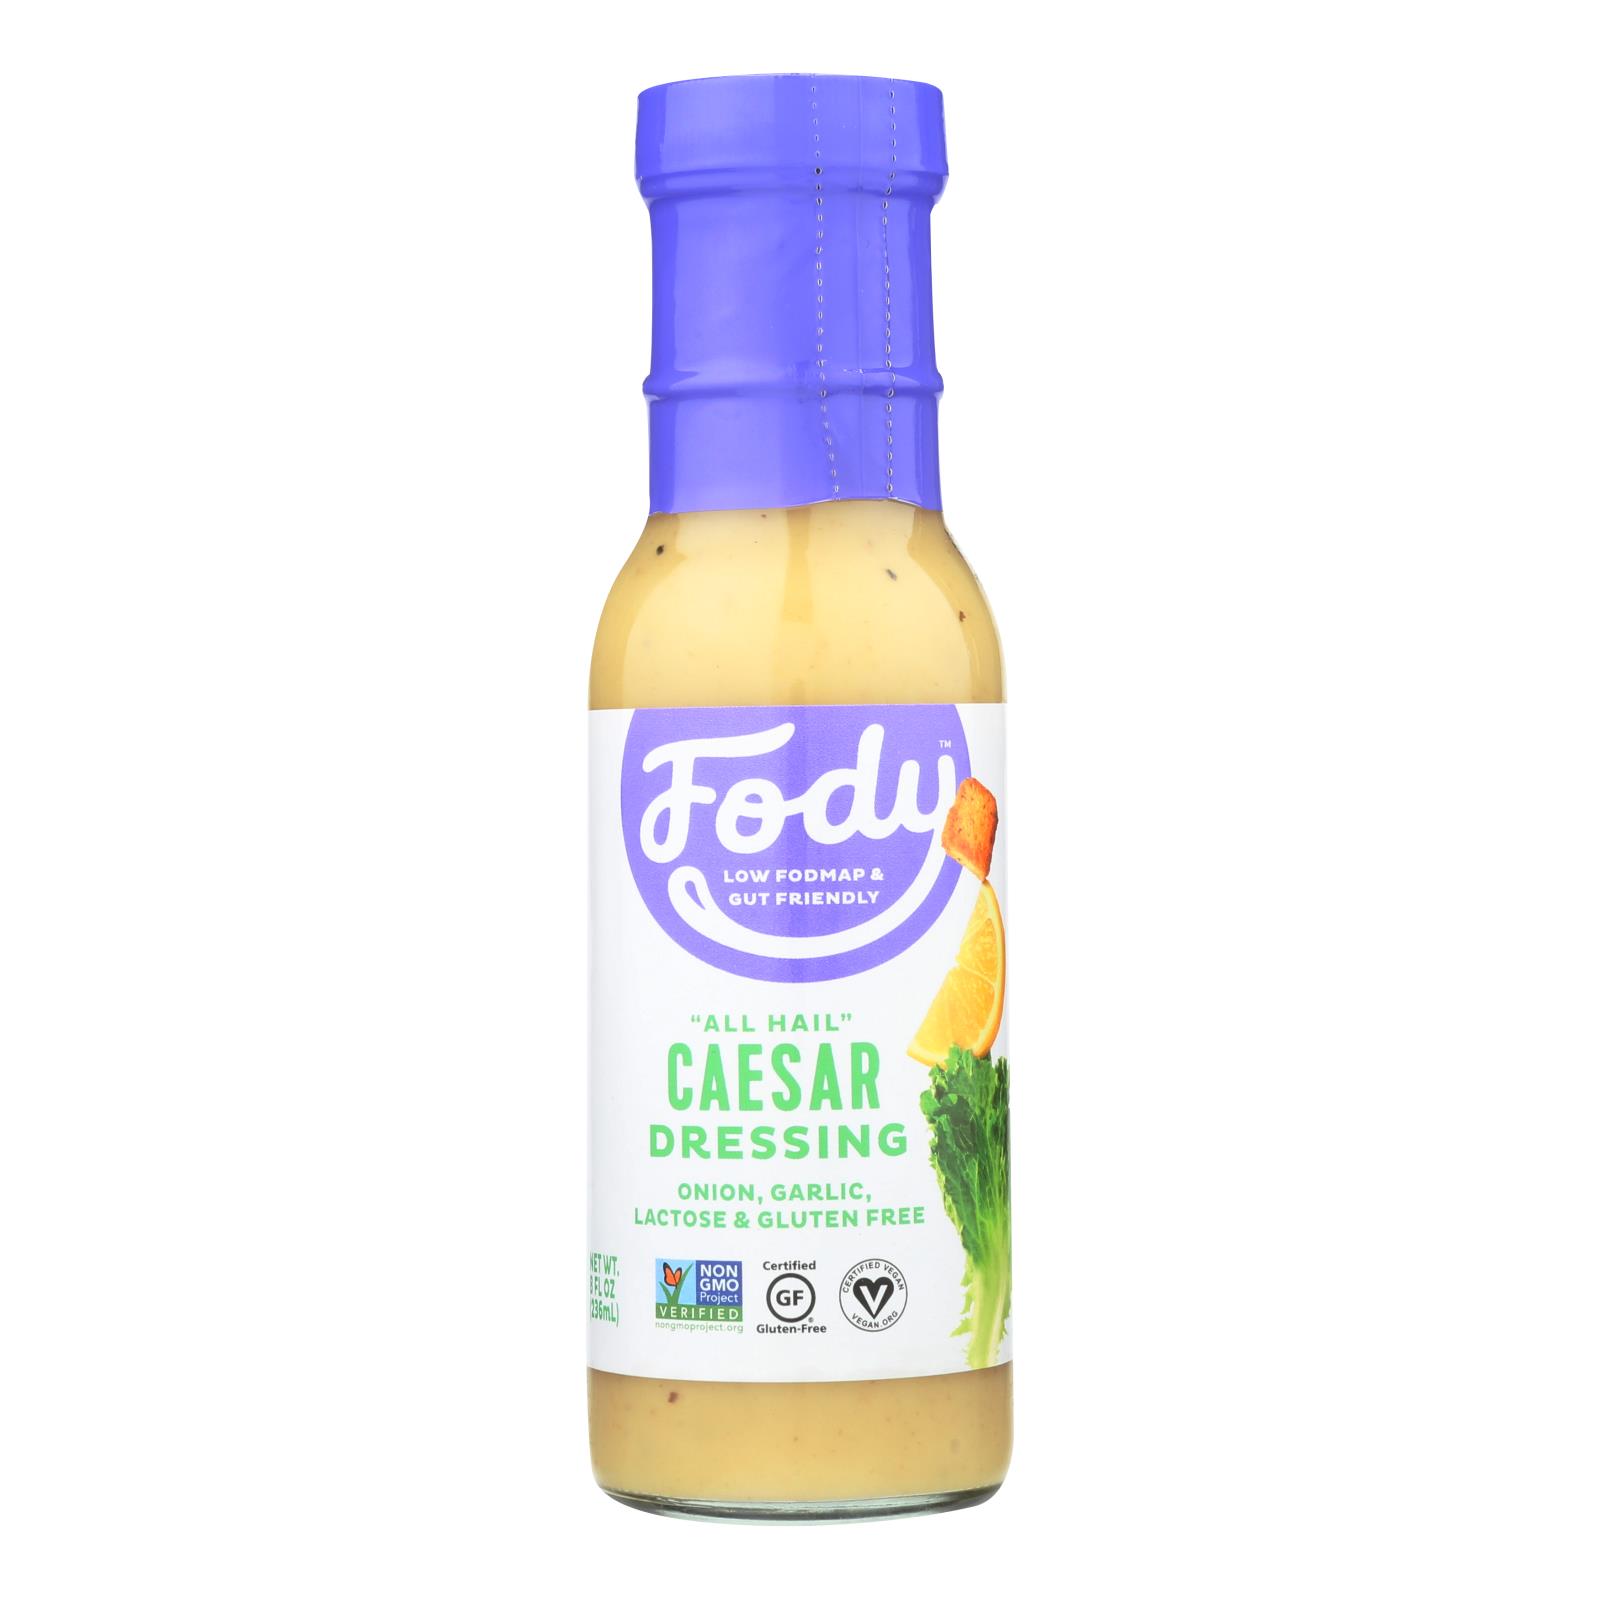 Fody Food Company - Dressing Salad Ceasar - Case of 6 - 8 FZ